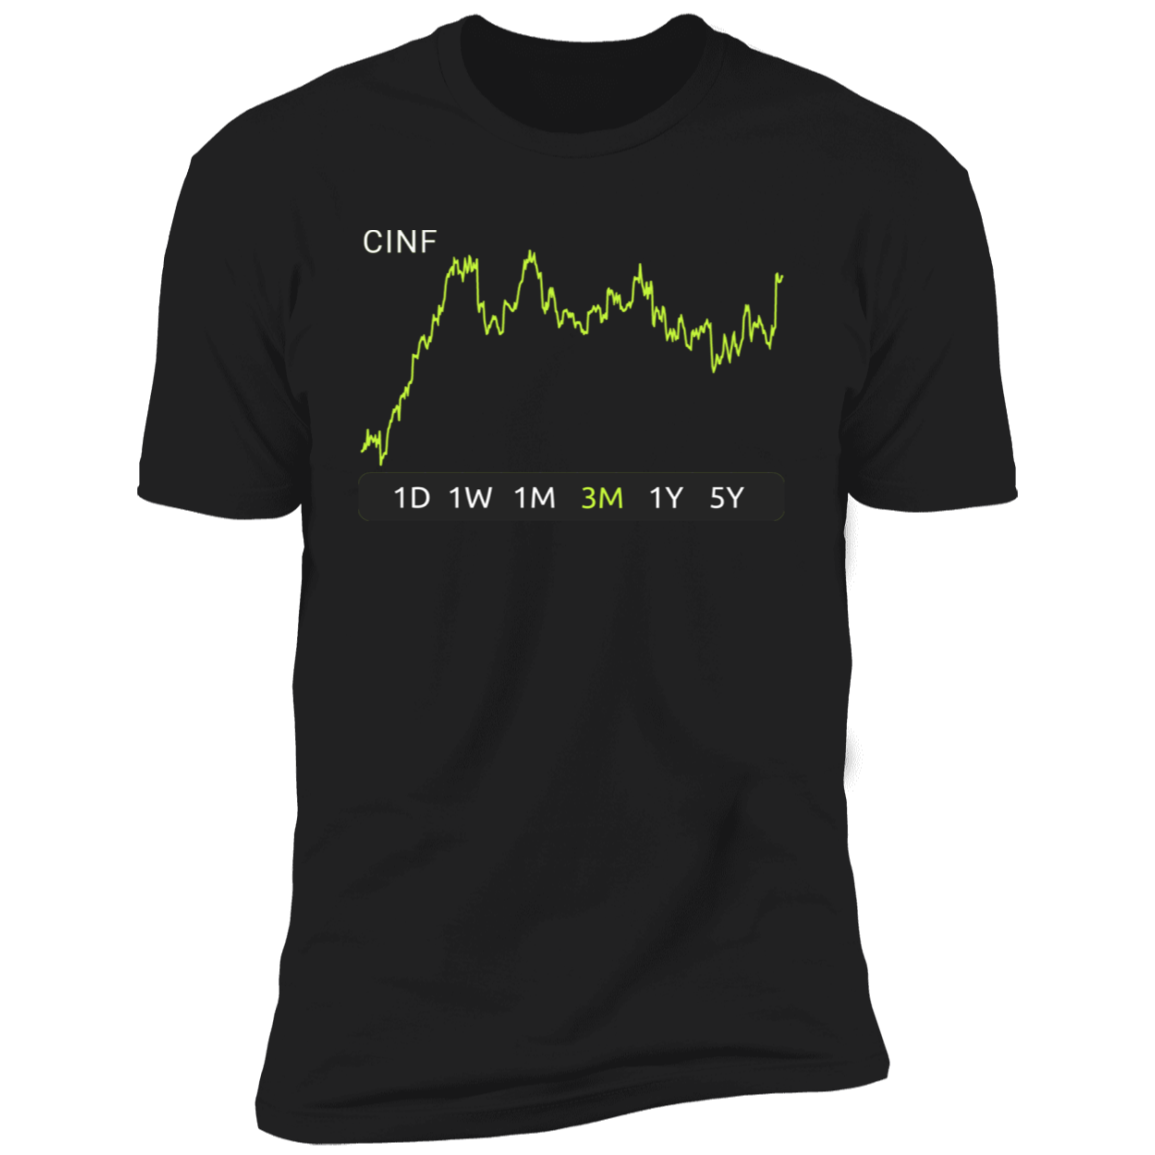 CINF Stock 3m Premium T-Shirt